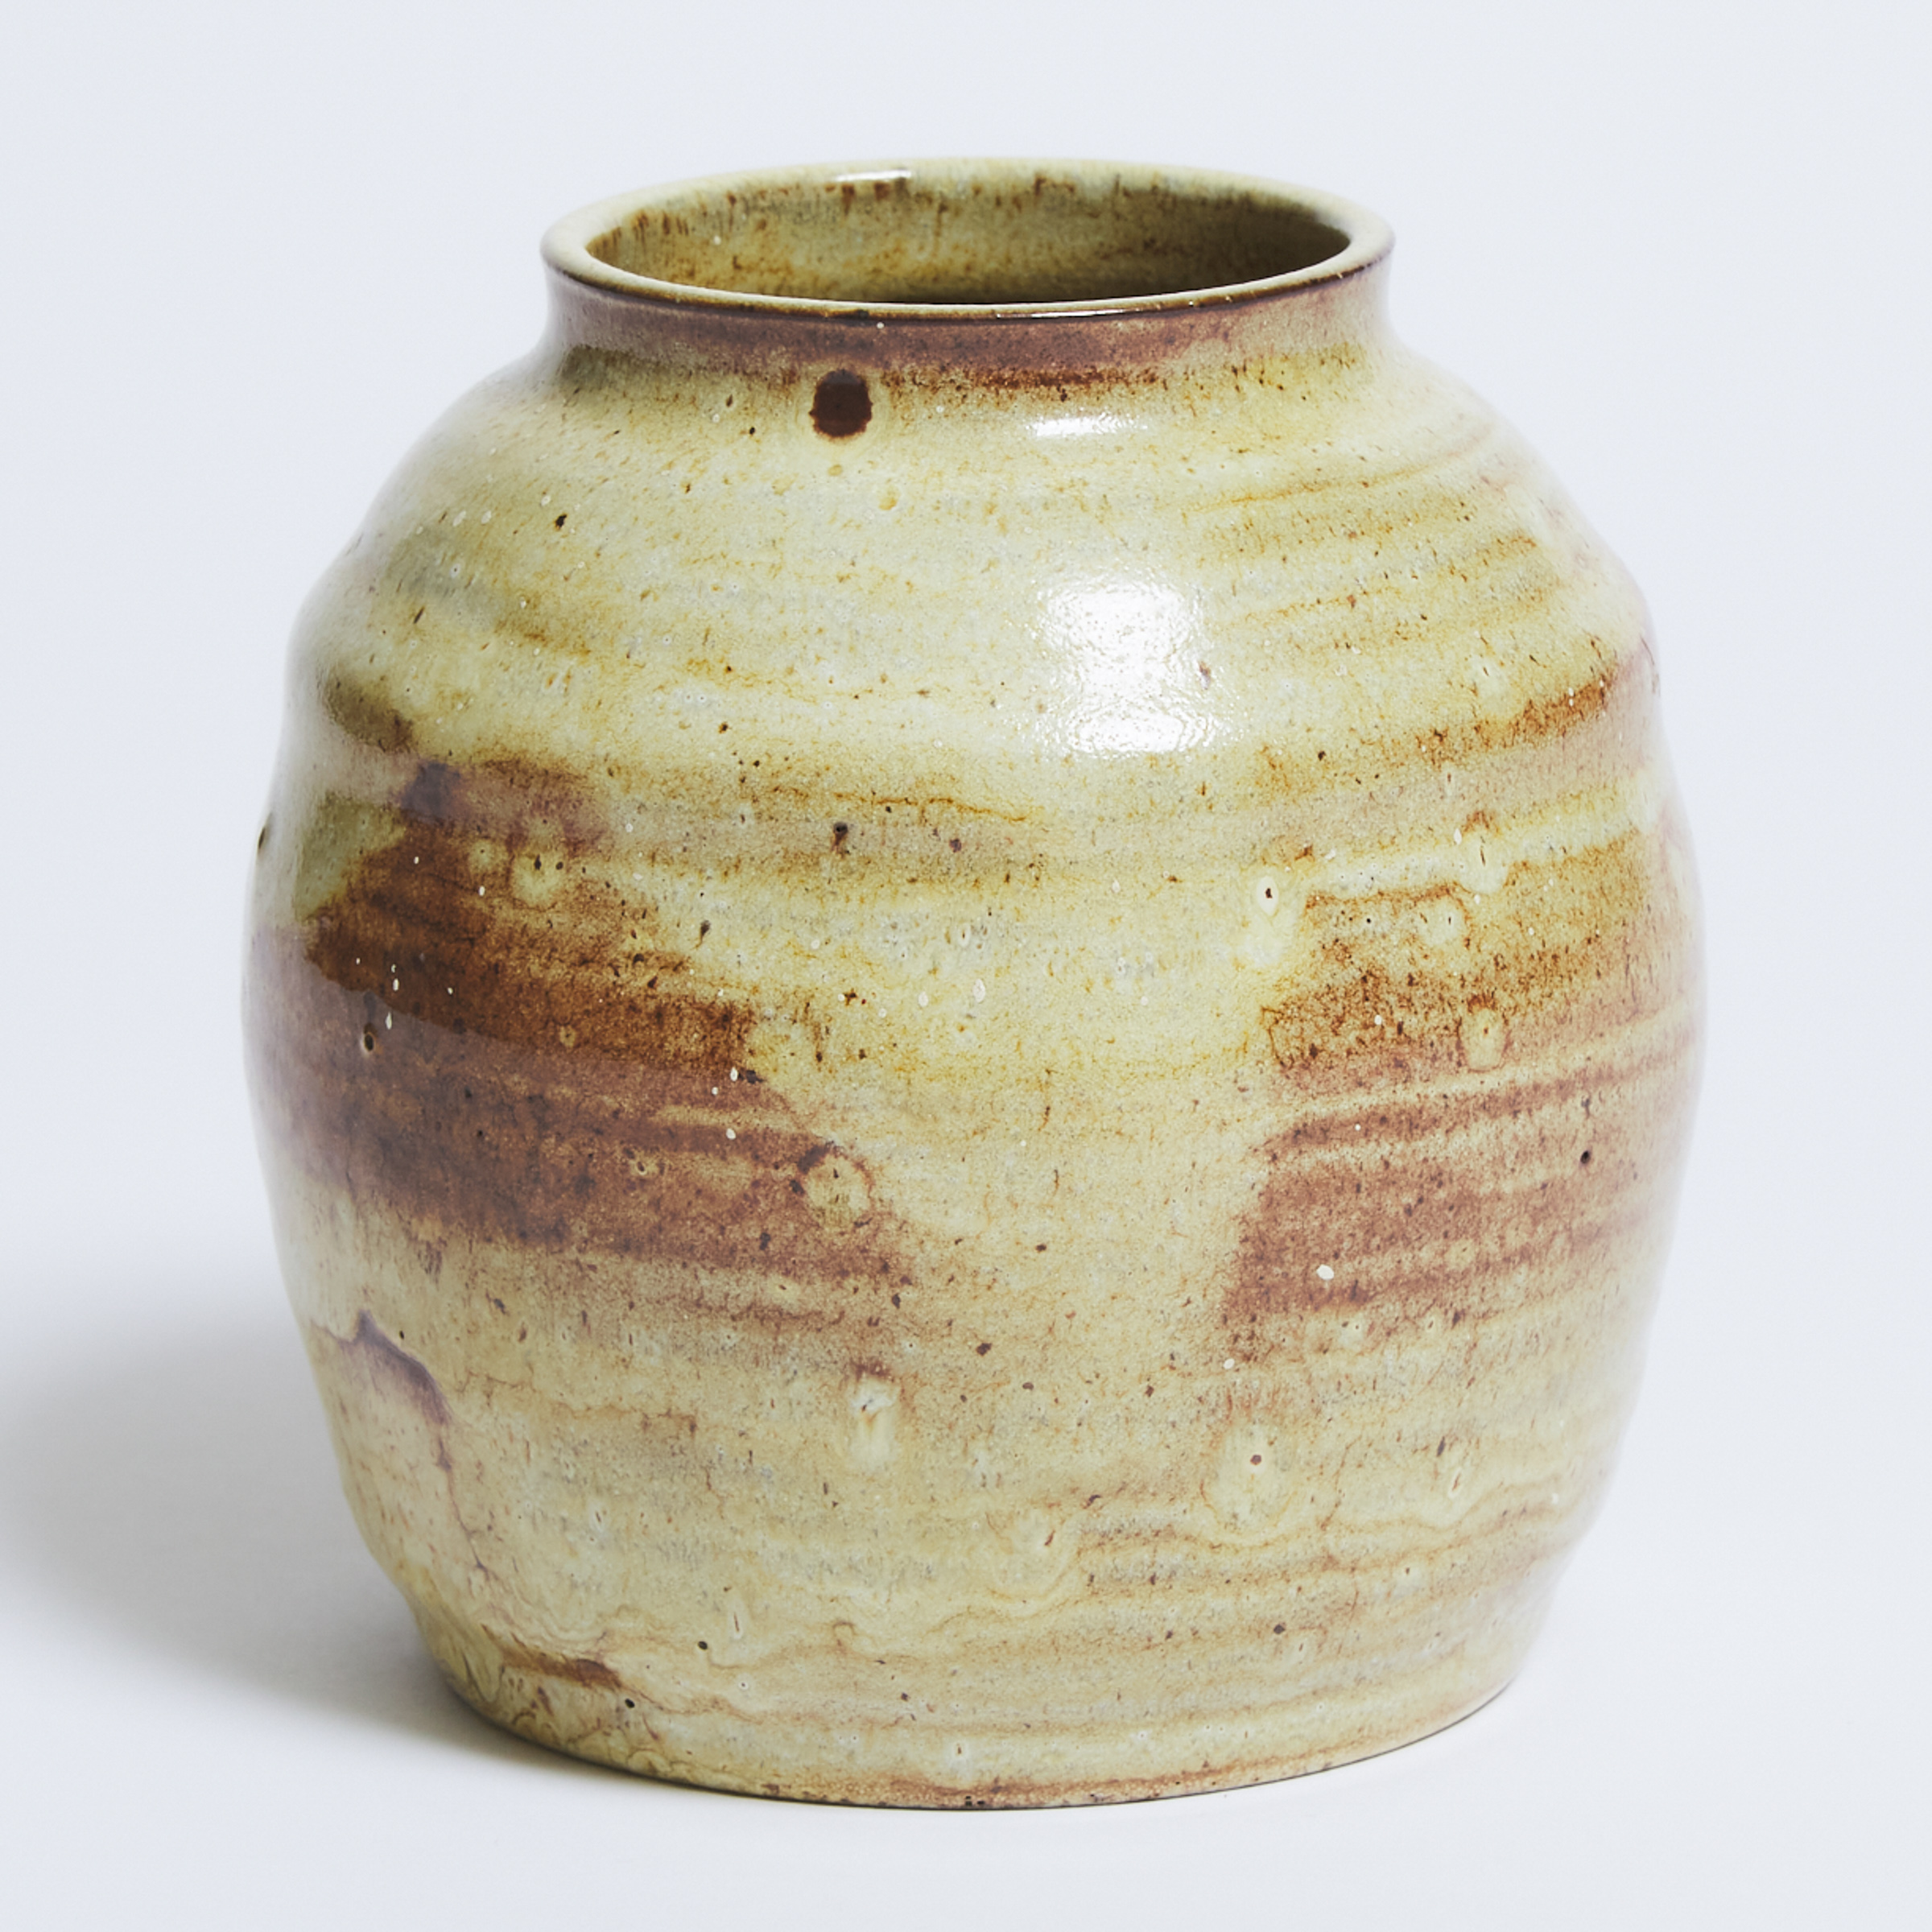 Deichmann Mottled Glazed Stoneware Vase, Kjeld & Erica Deichmann, c.1950